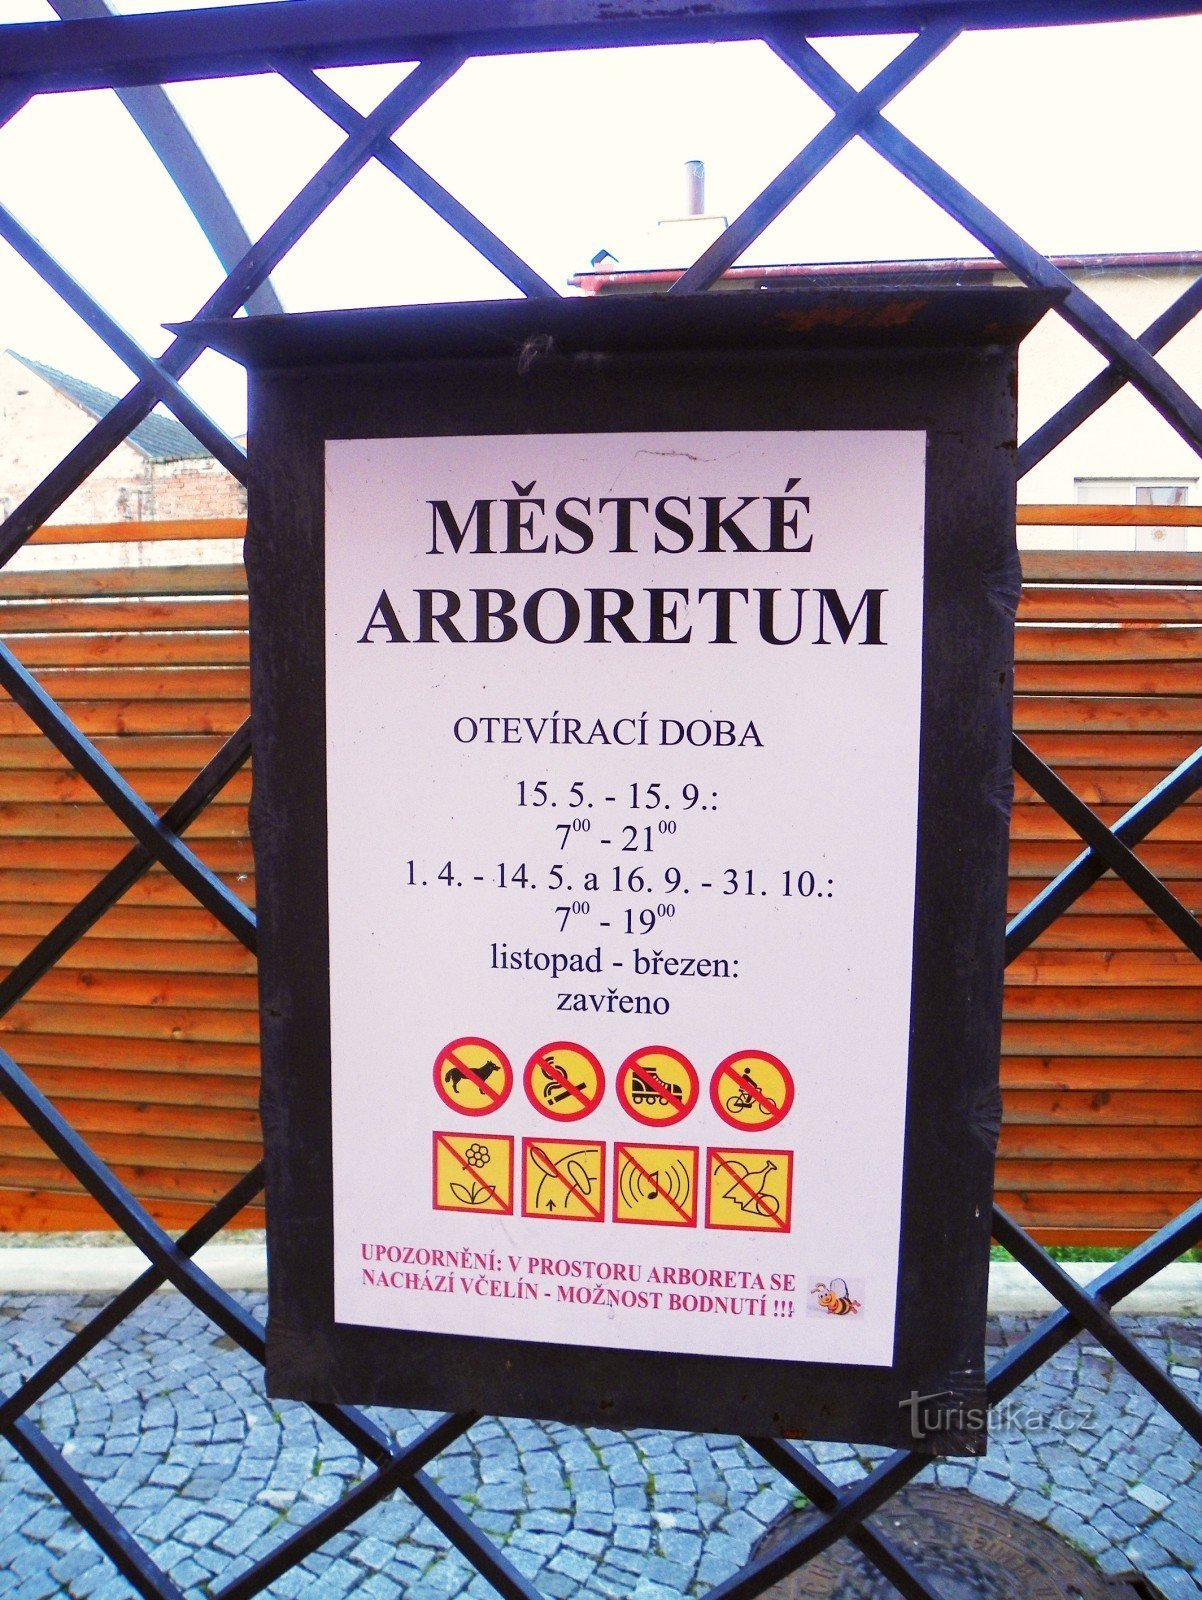 Arboretum entrance information